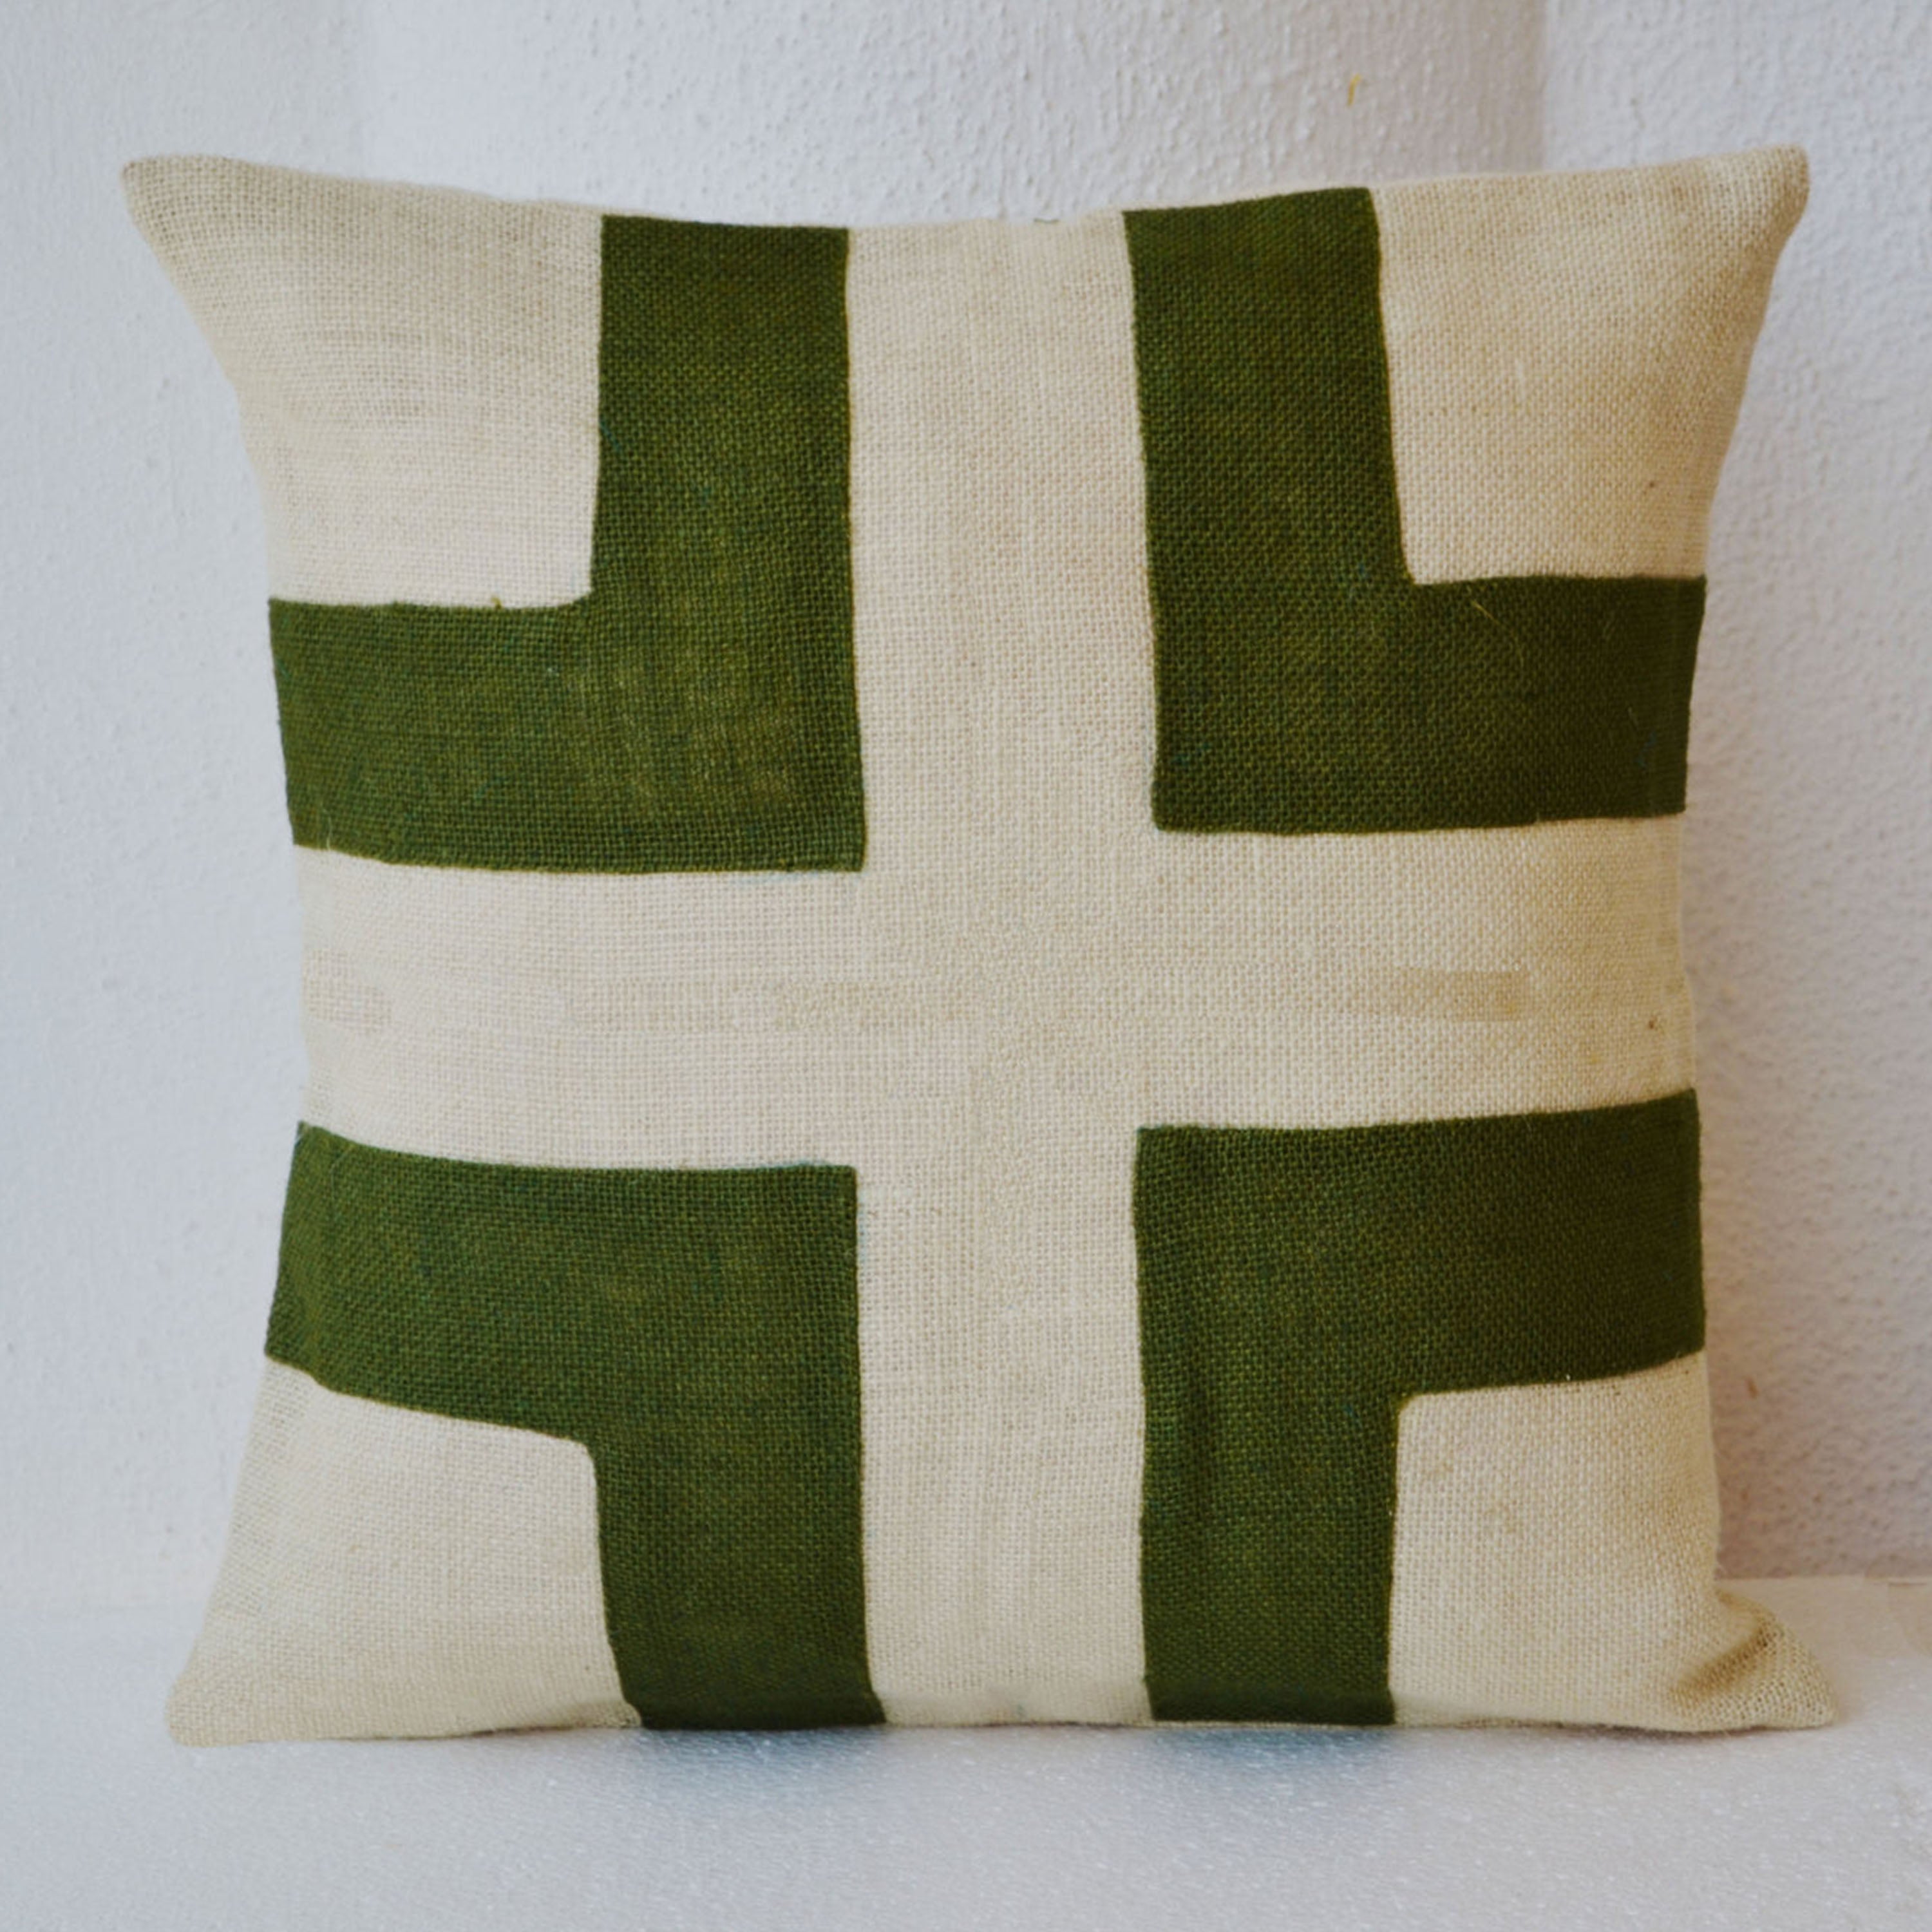 Cream Burlap Cushion Cover With Green Applique Decorative Cushion Cover In Bold Geometric Design